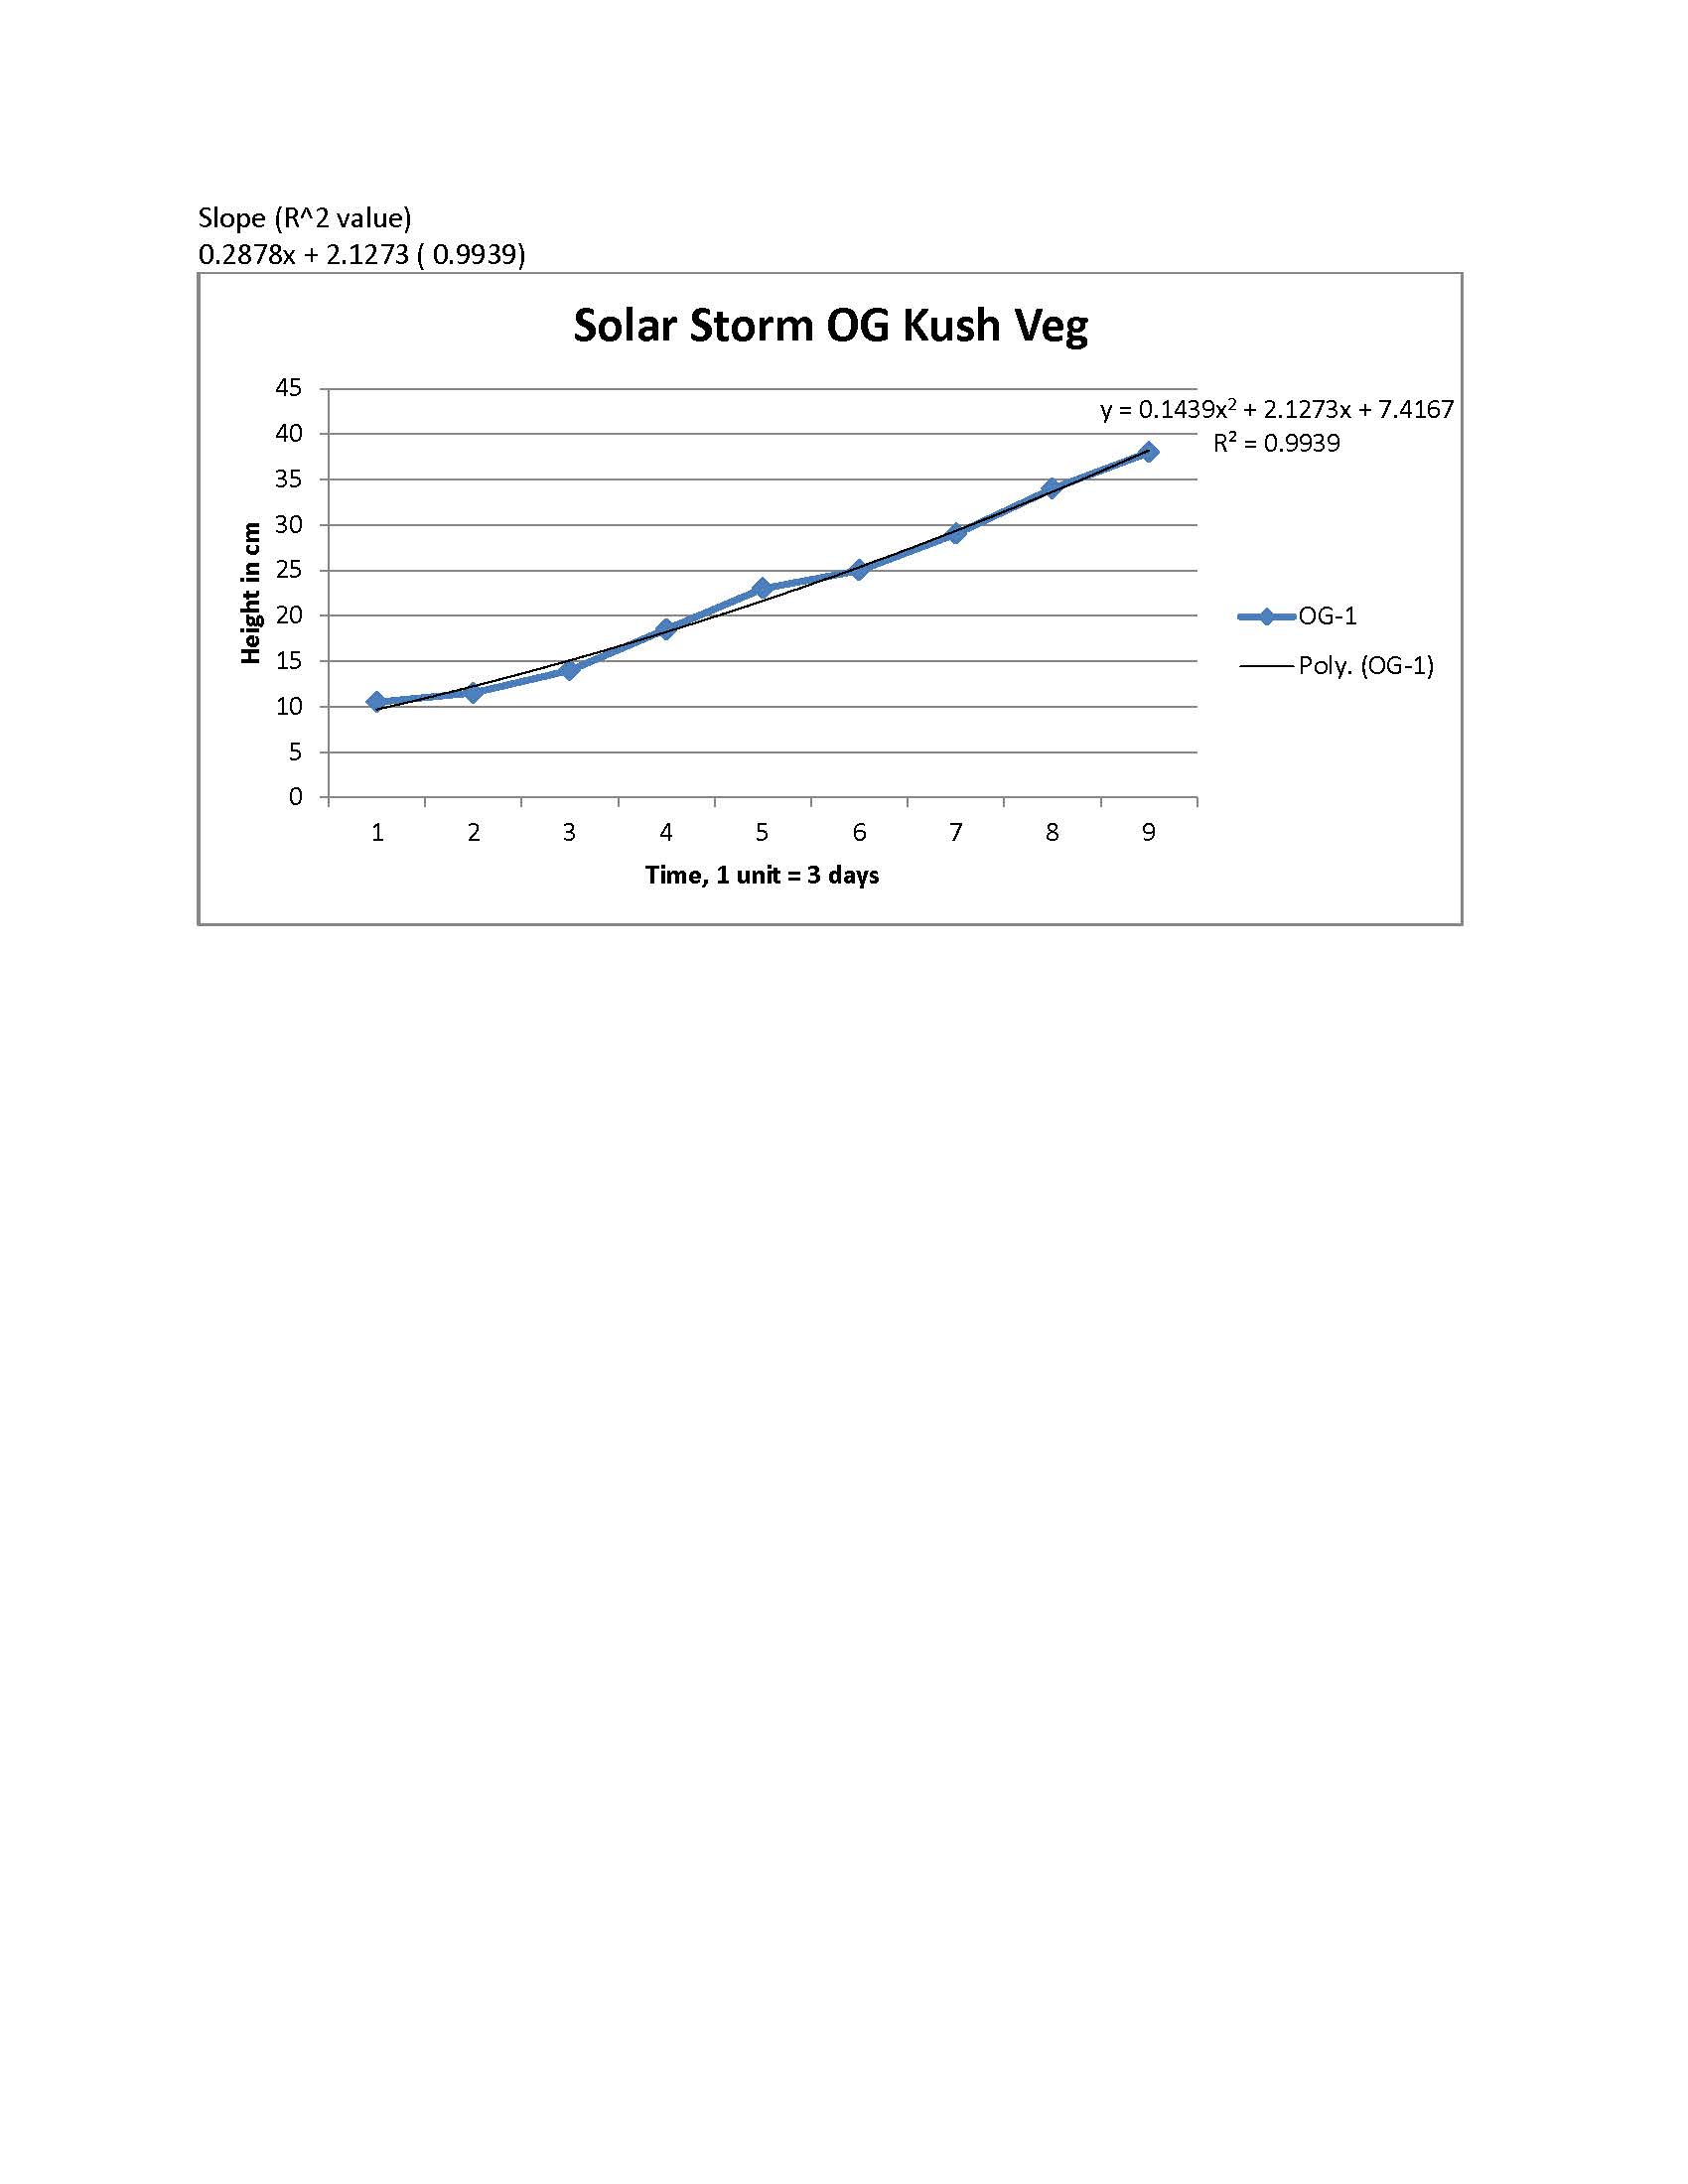 Solar Storm OG Growth.jpg